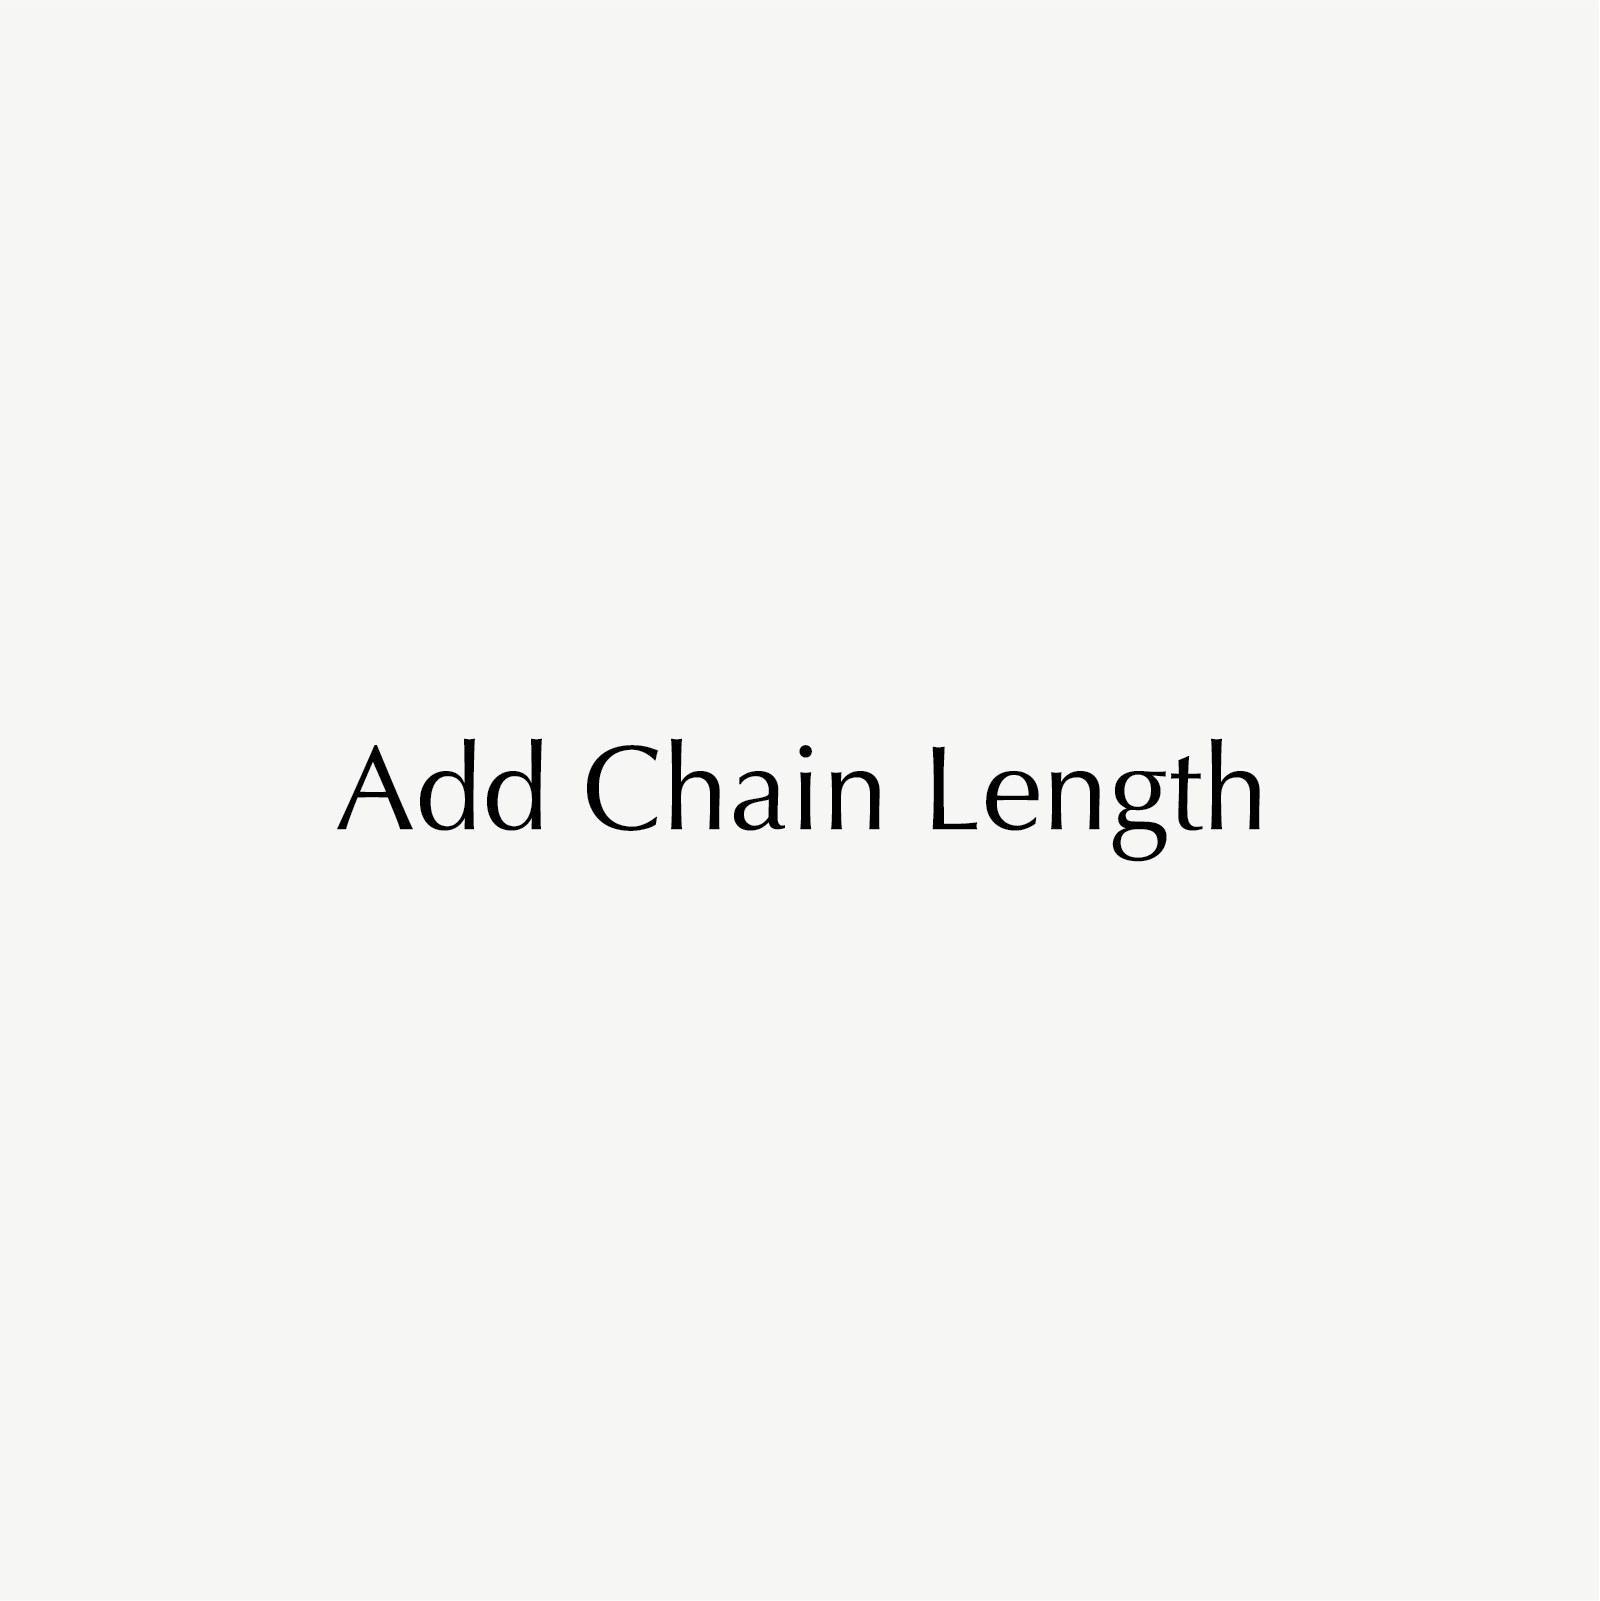 Add Chain Length